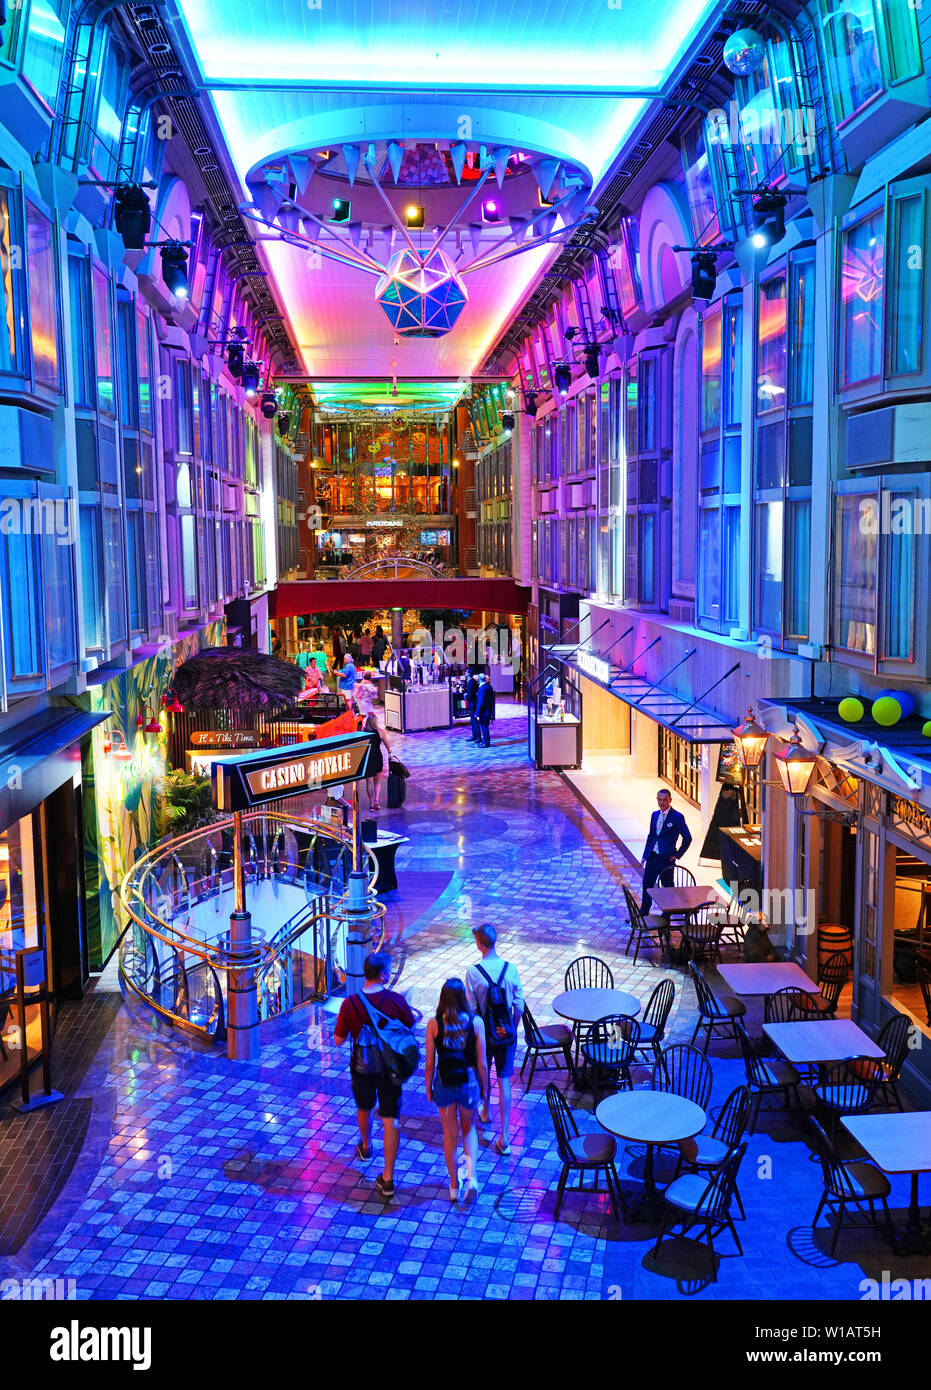 Promenade Shops on Cruise Ship, The Promenade on Royal Cari…